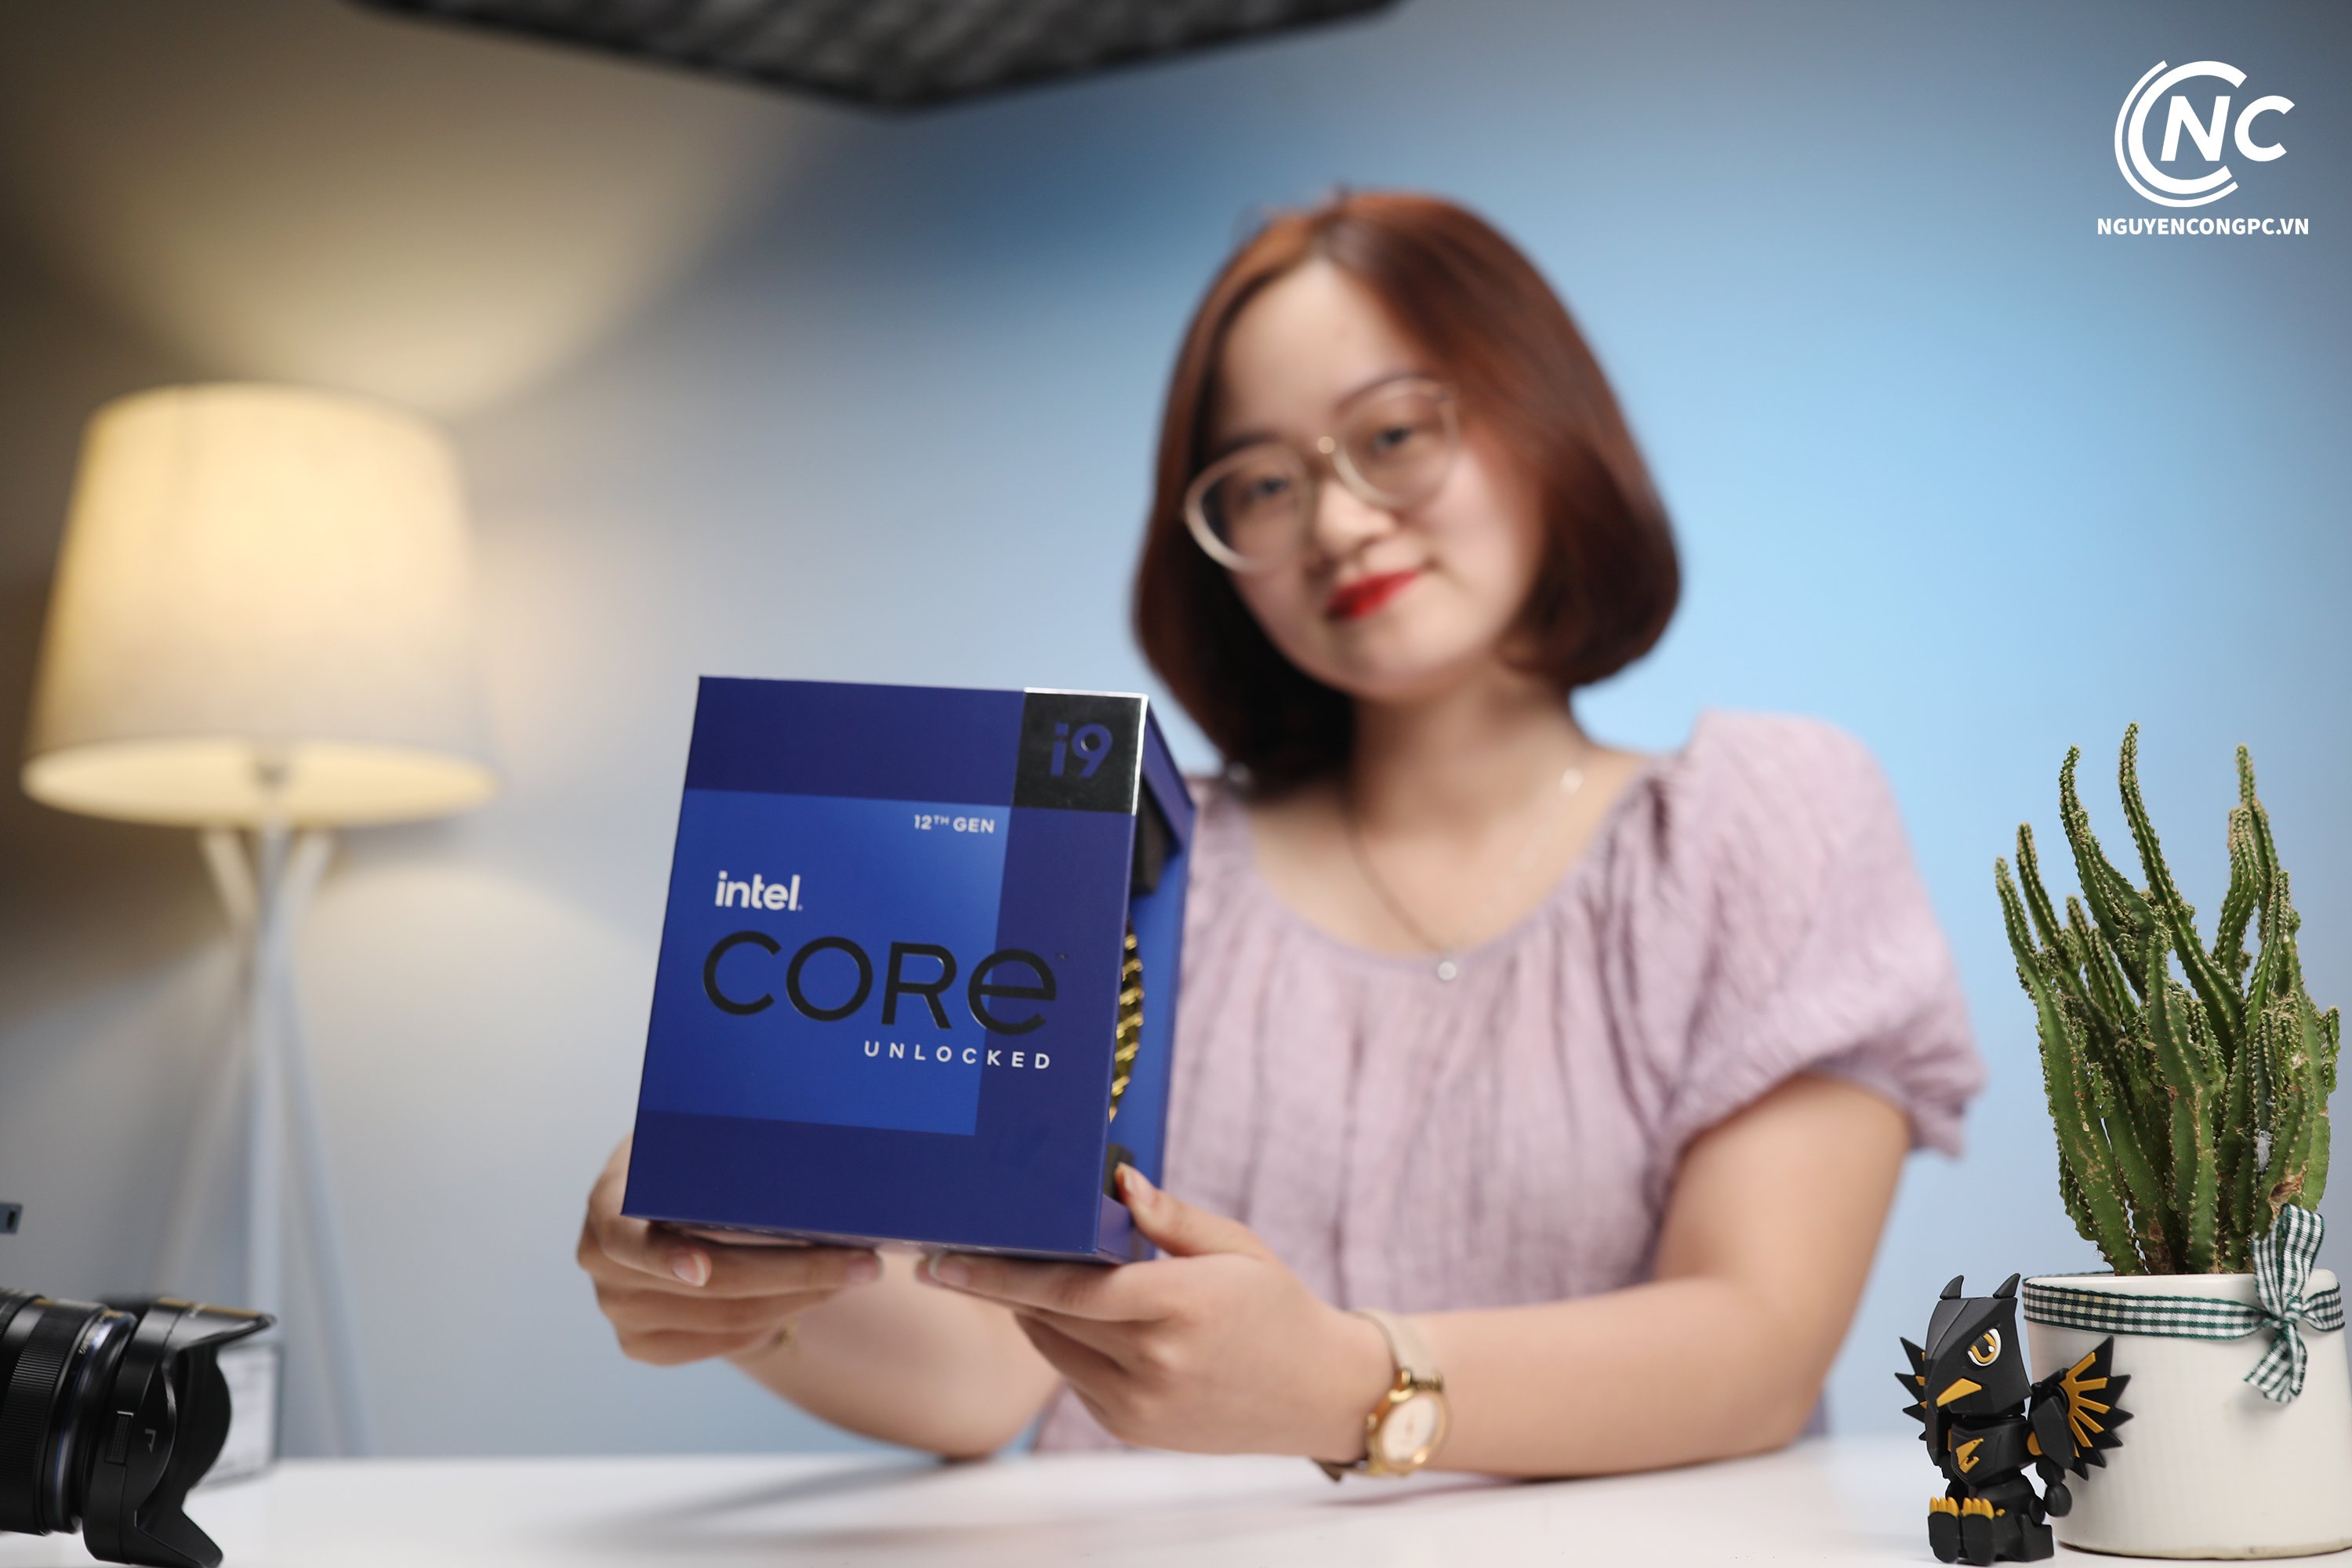 CPU Intel Core i9-12900KS